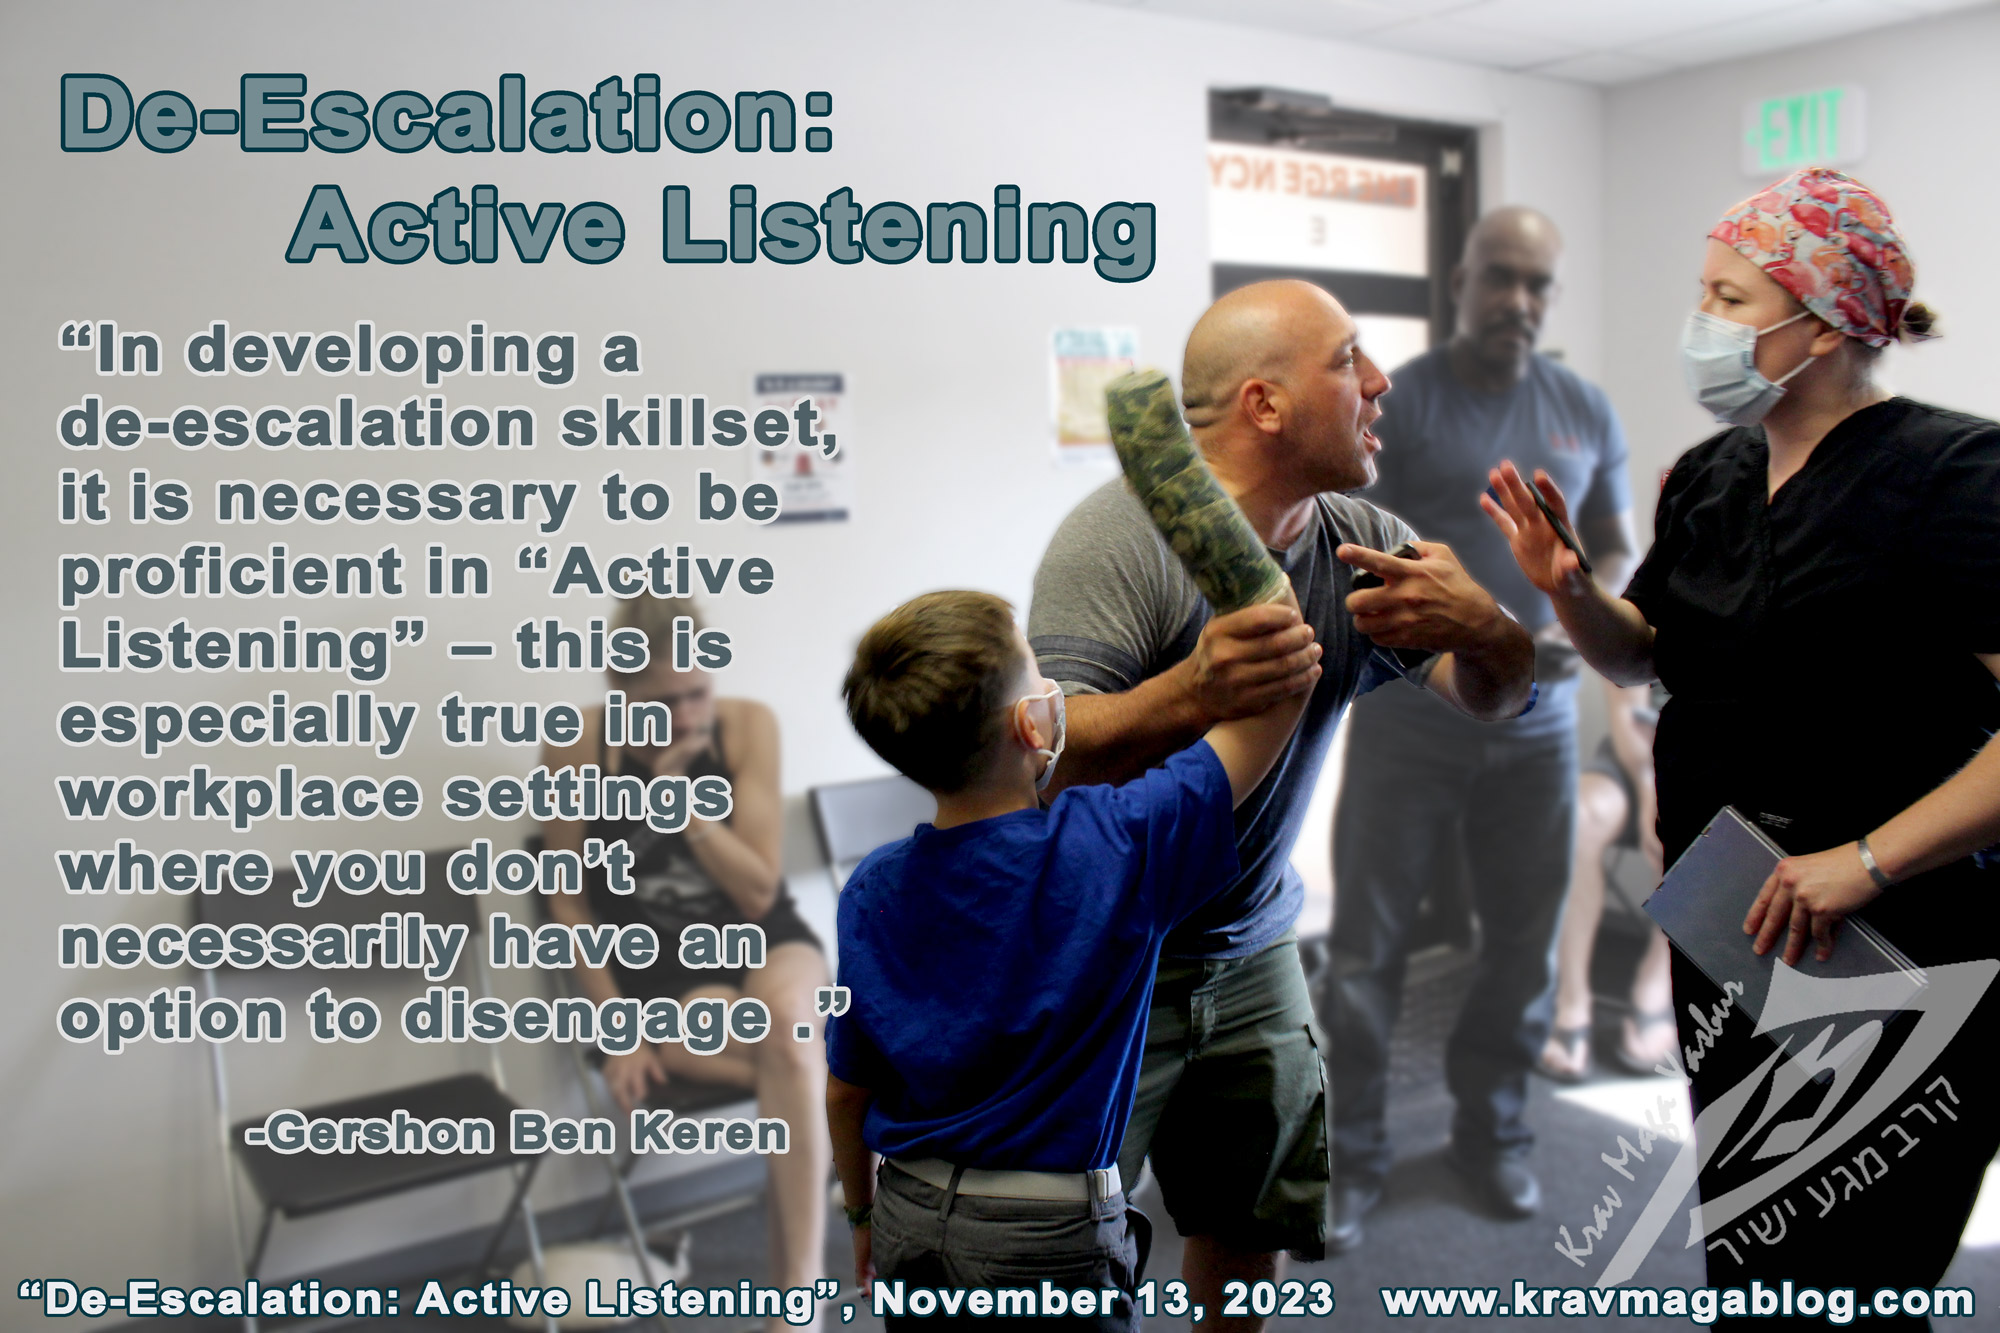 De-escalation and Active Listening